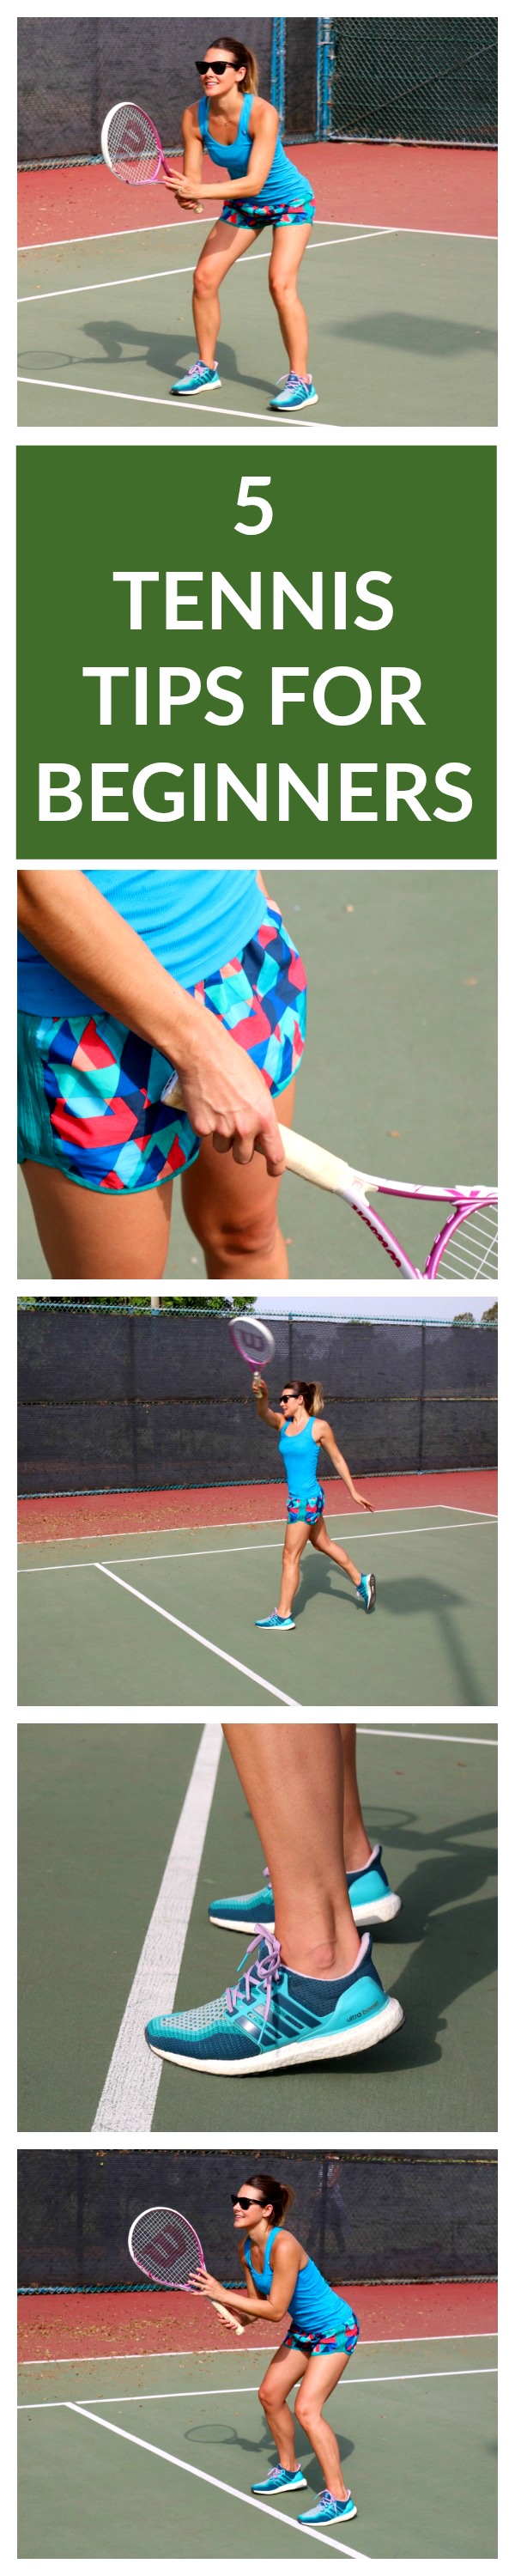 Tennis Tips for Beginners